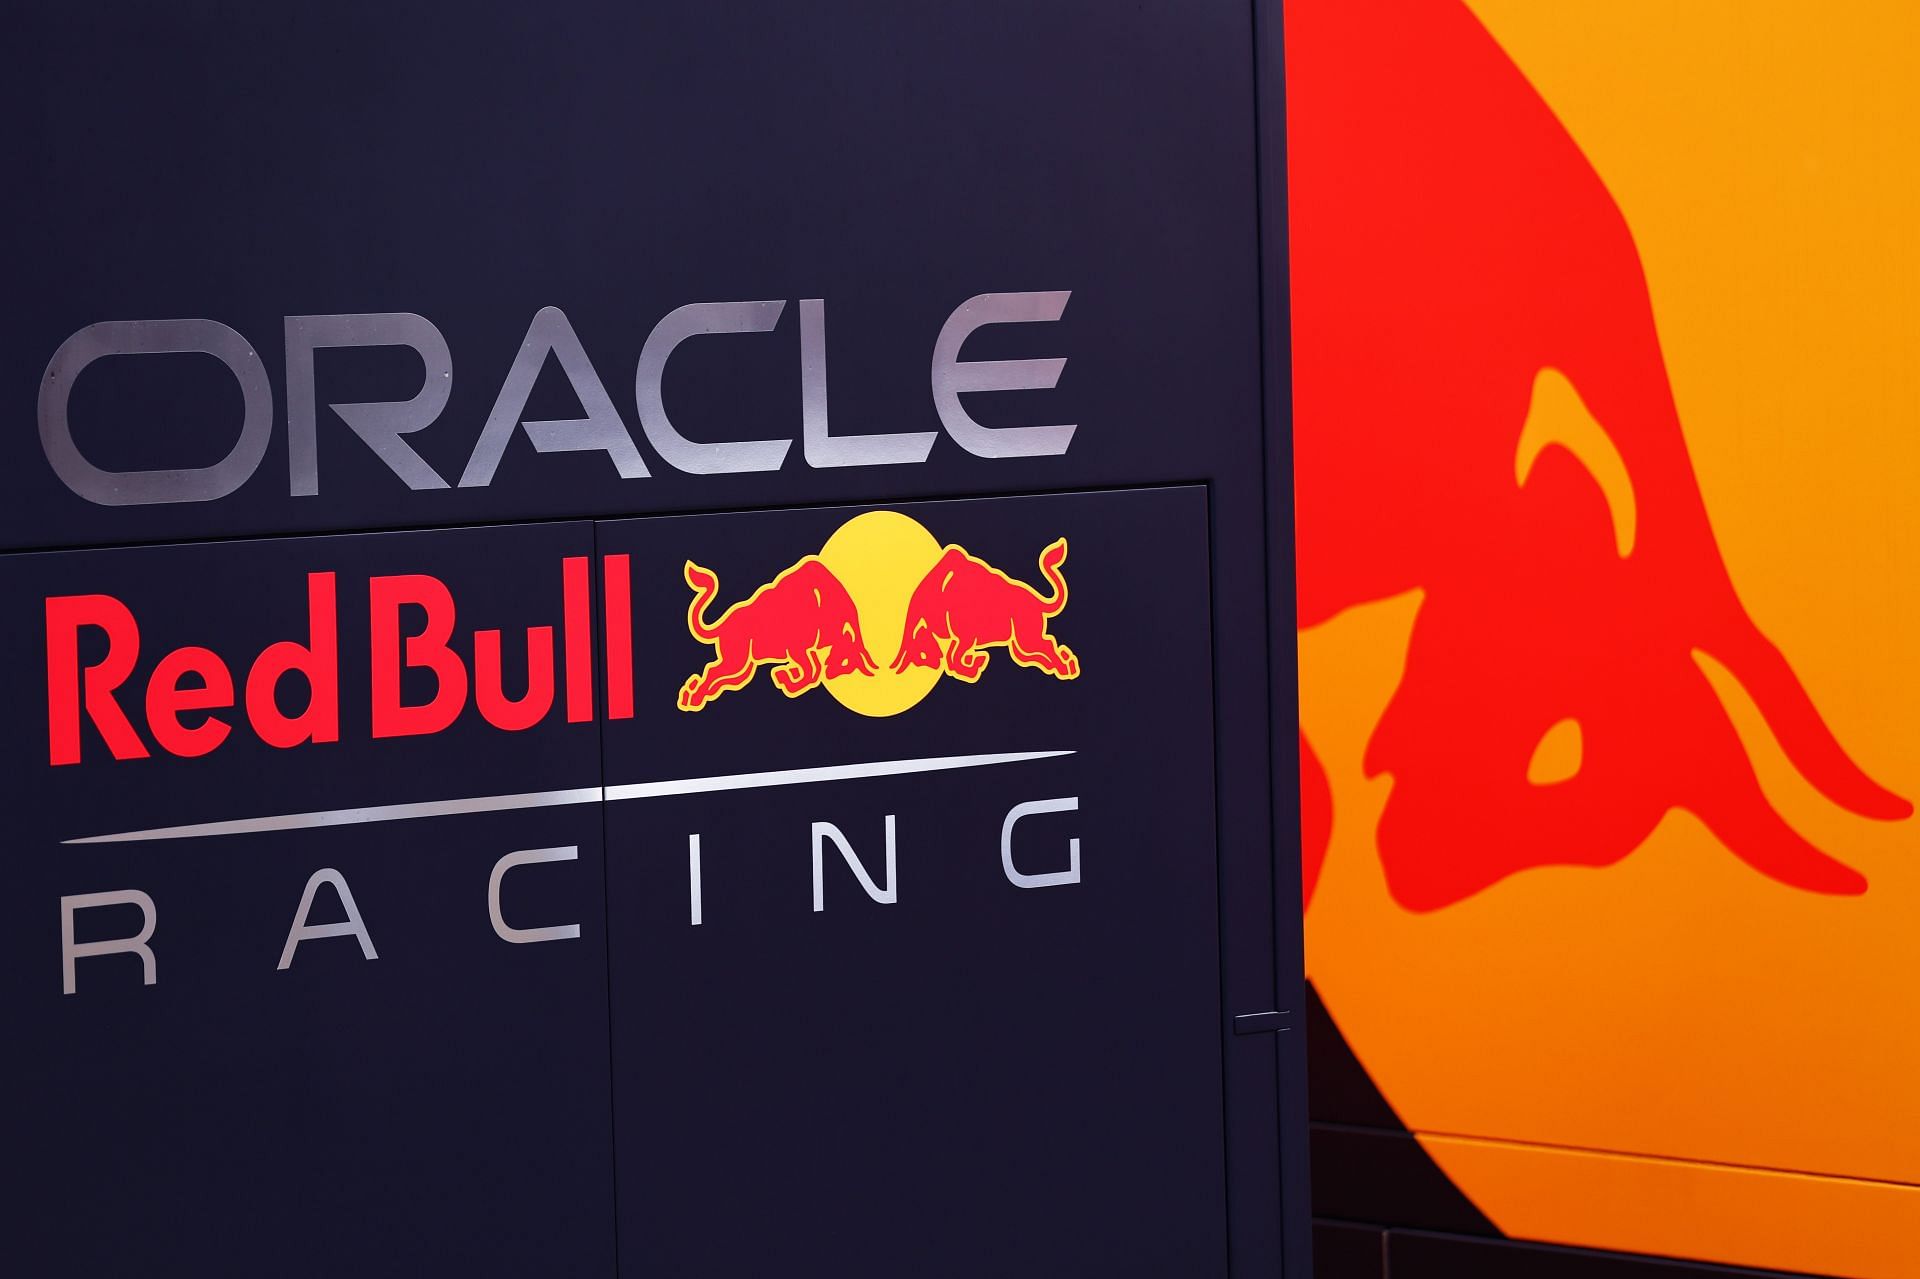 F1 Grand Prix of Hungary - The Red Bull motorhome at the Hungaroring